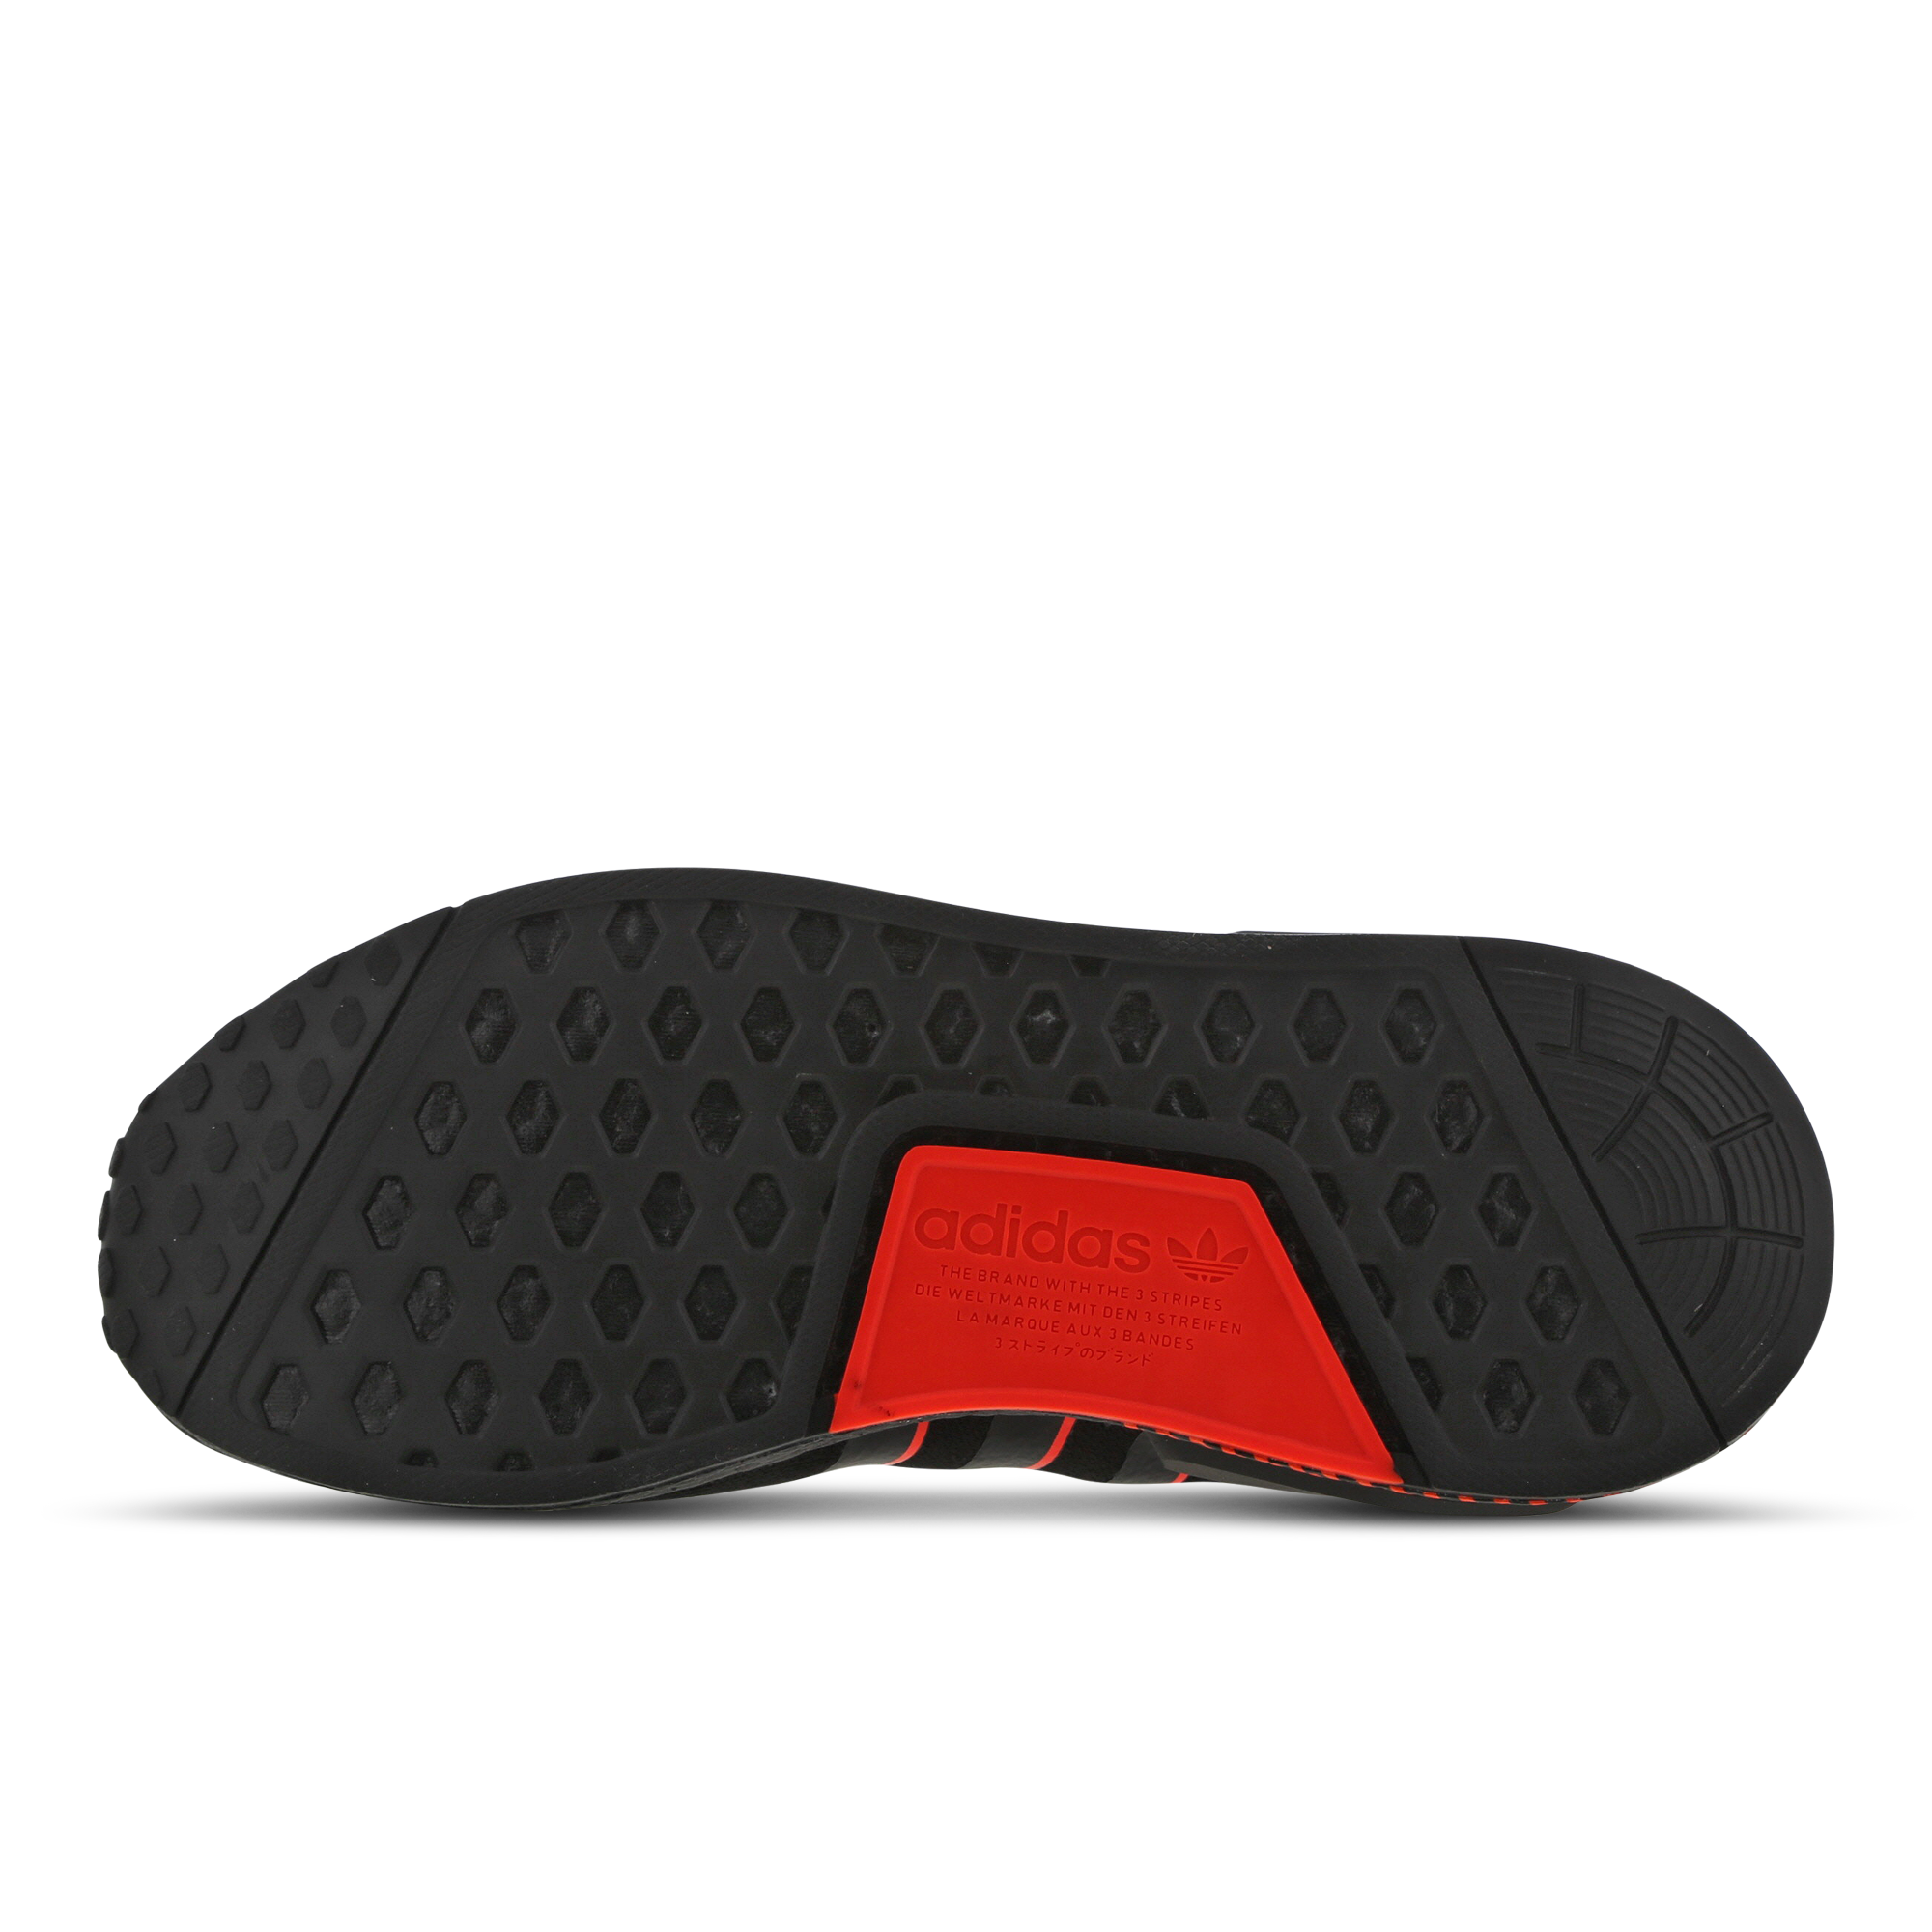 On sale adidas NMD R1 PK Black Glitch Sneaker shouts